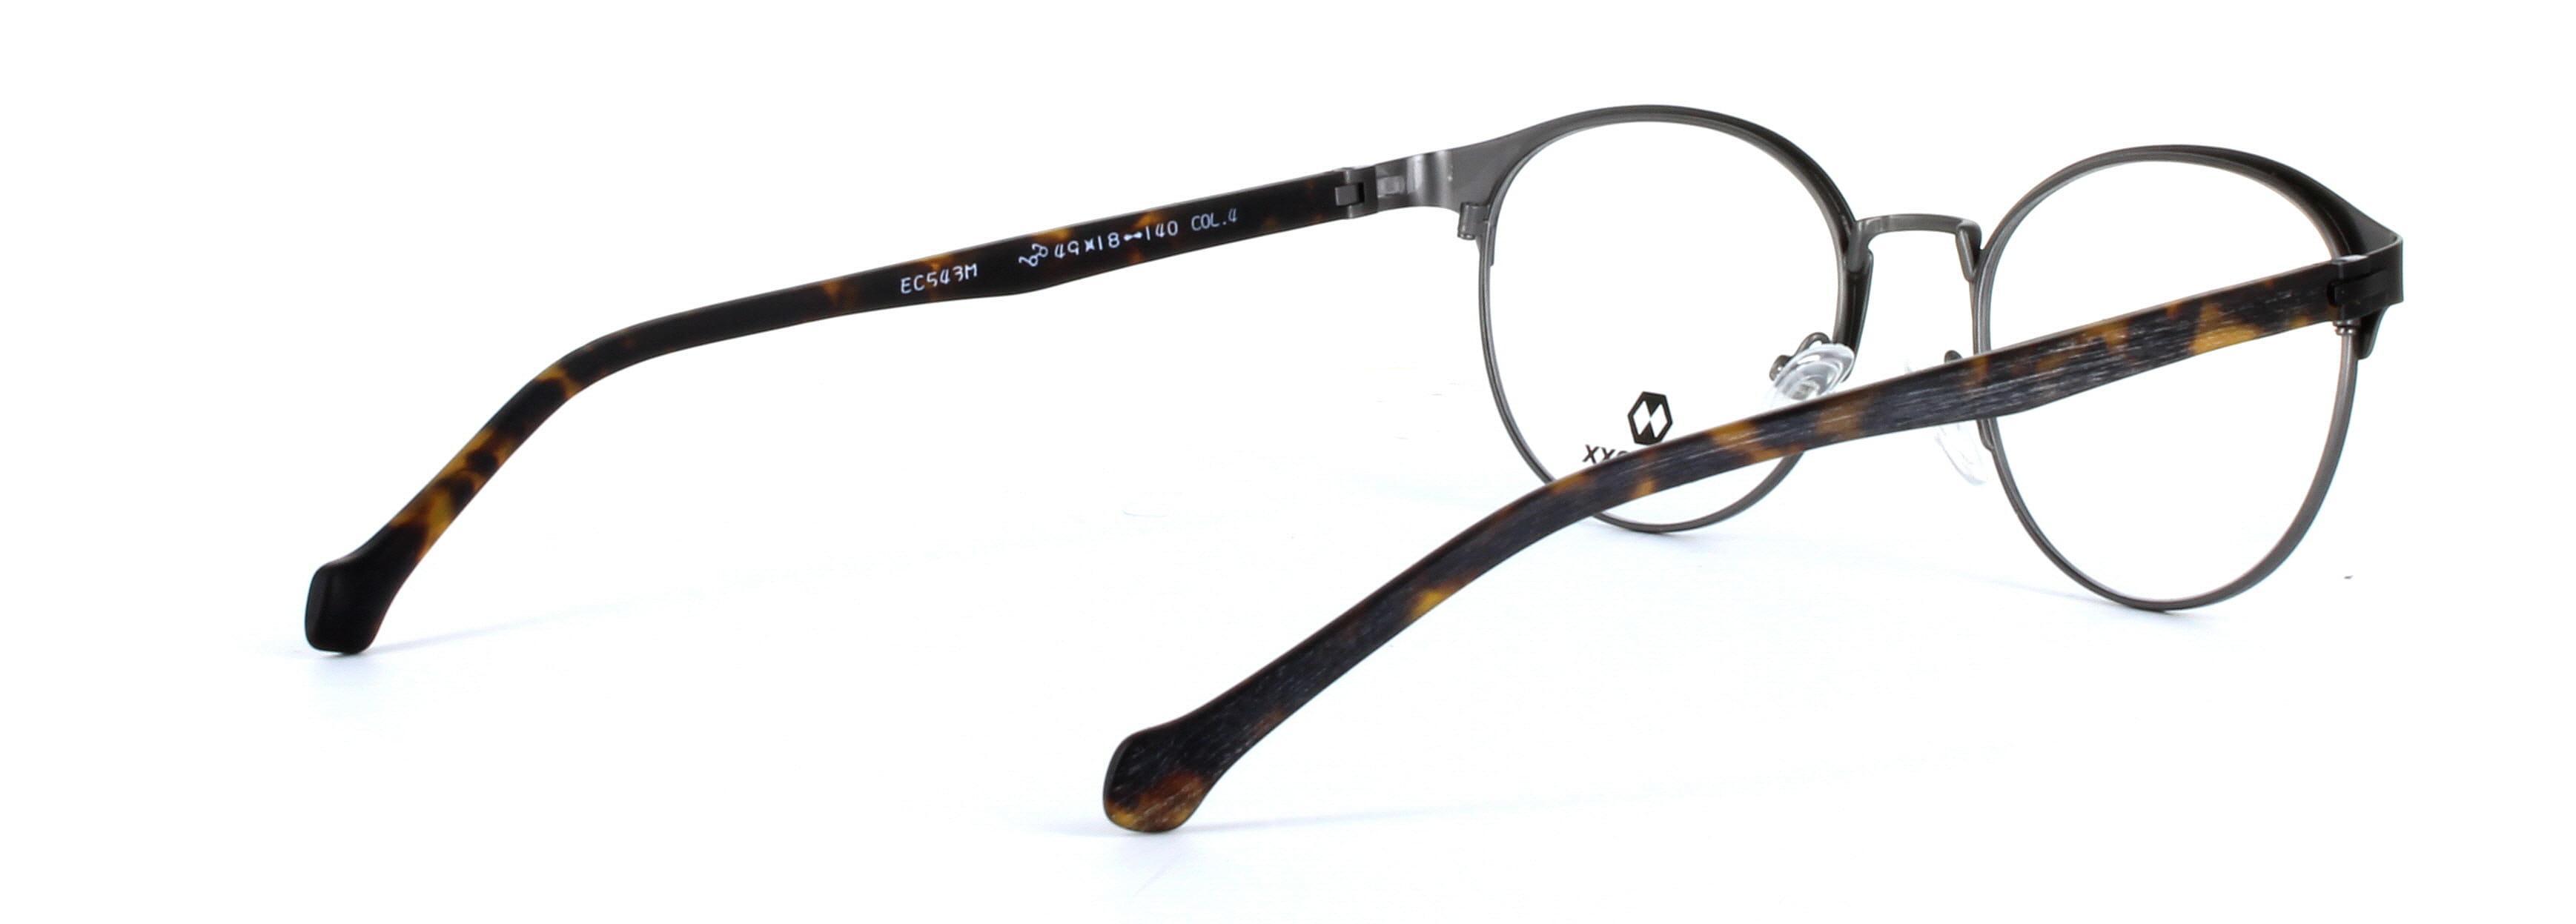 Eyecroxx 543-C4 Black Full Rim Round Metal Glasses - Image View 4